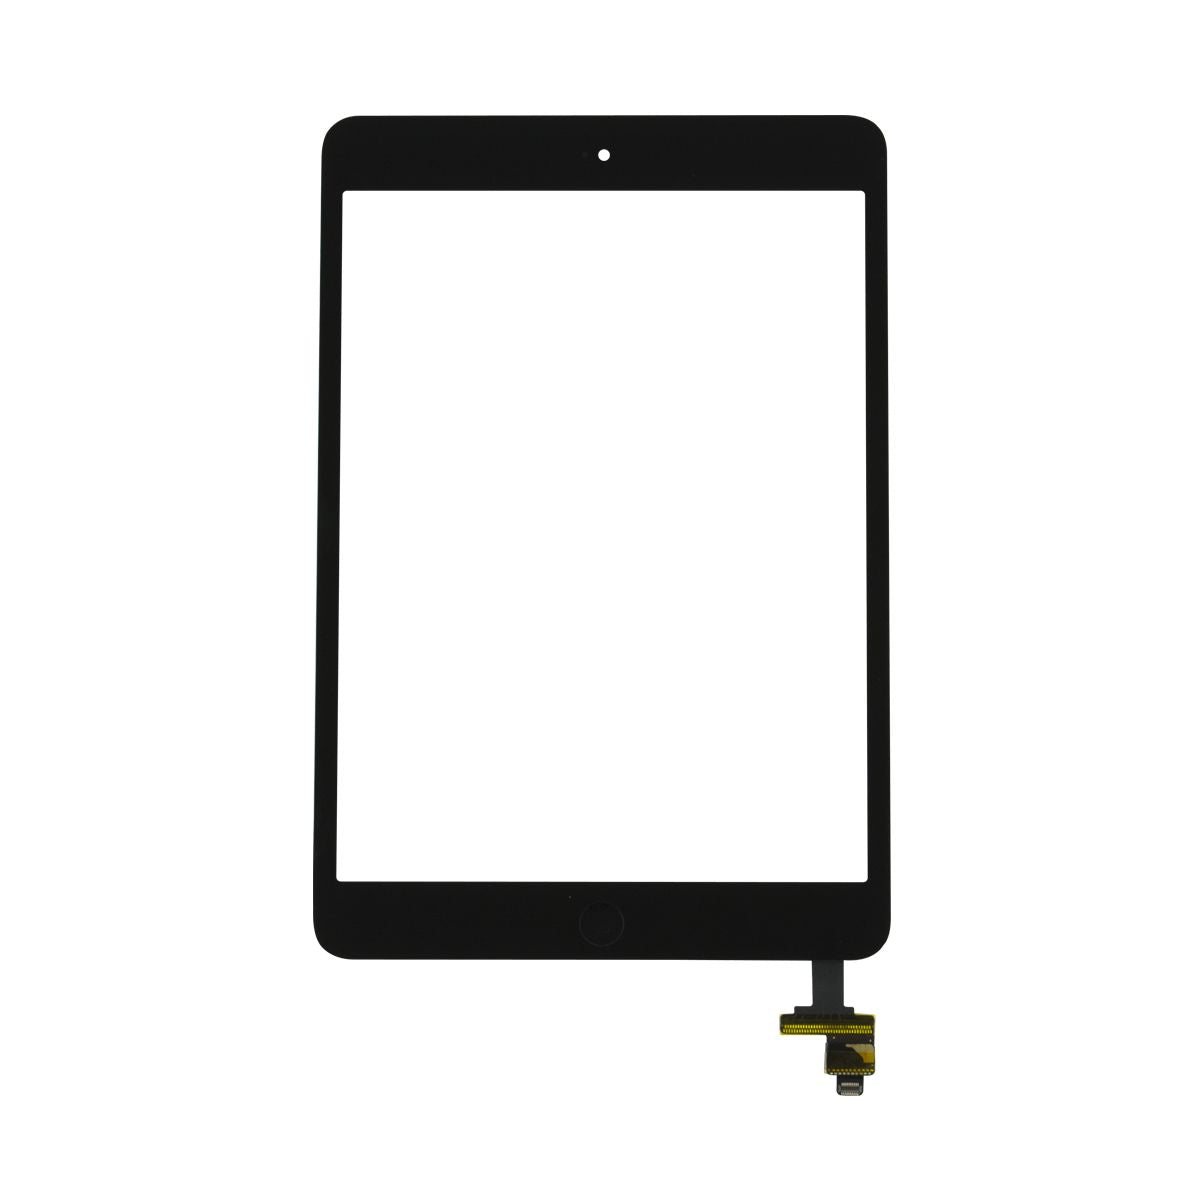 iPad Cargador Rápido, iPad Pro Cargador, iPad Nicaragua